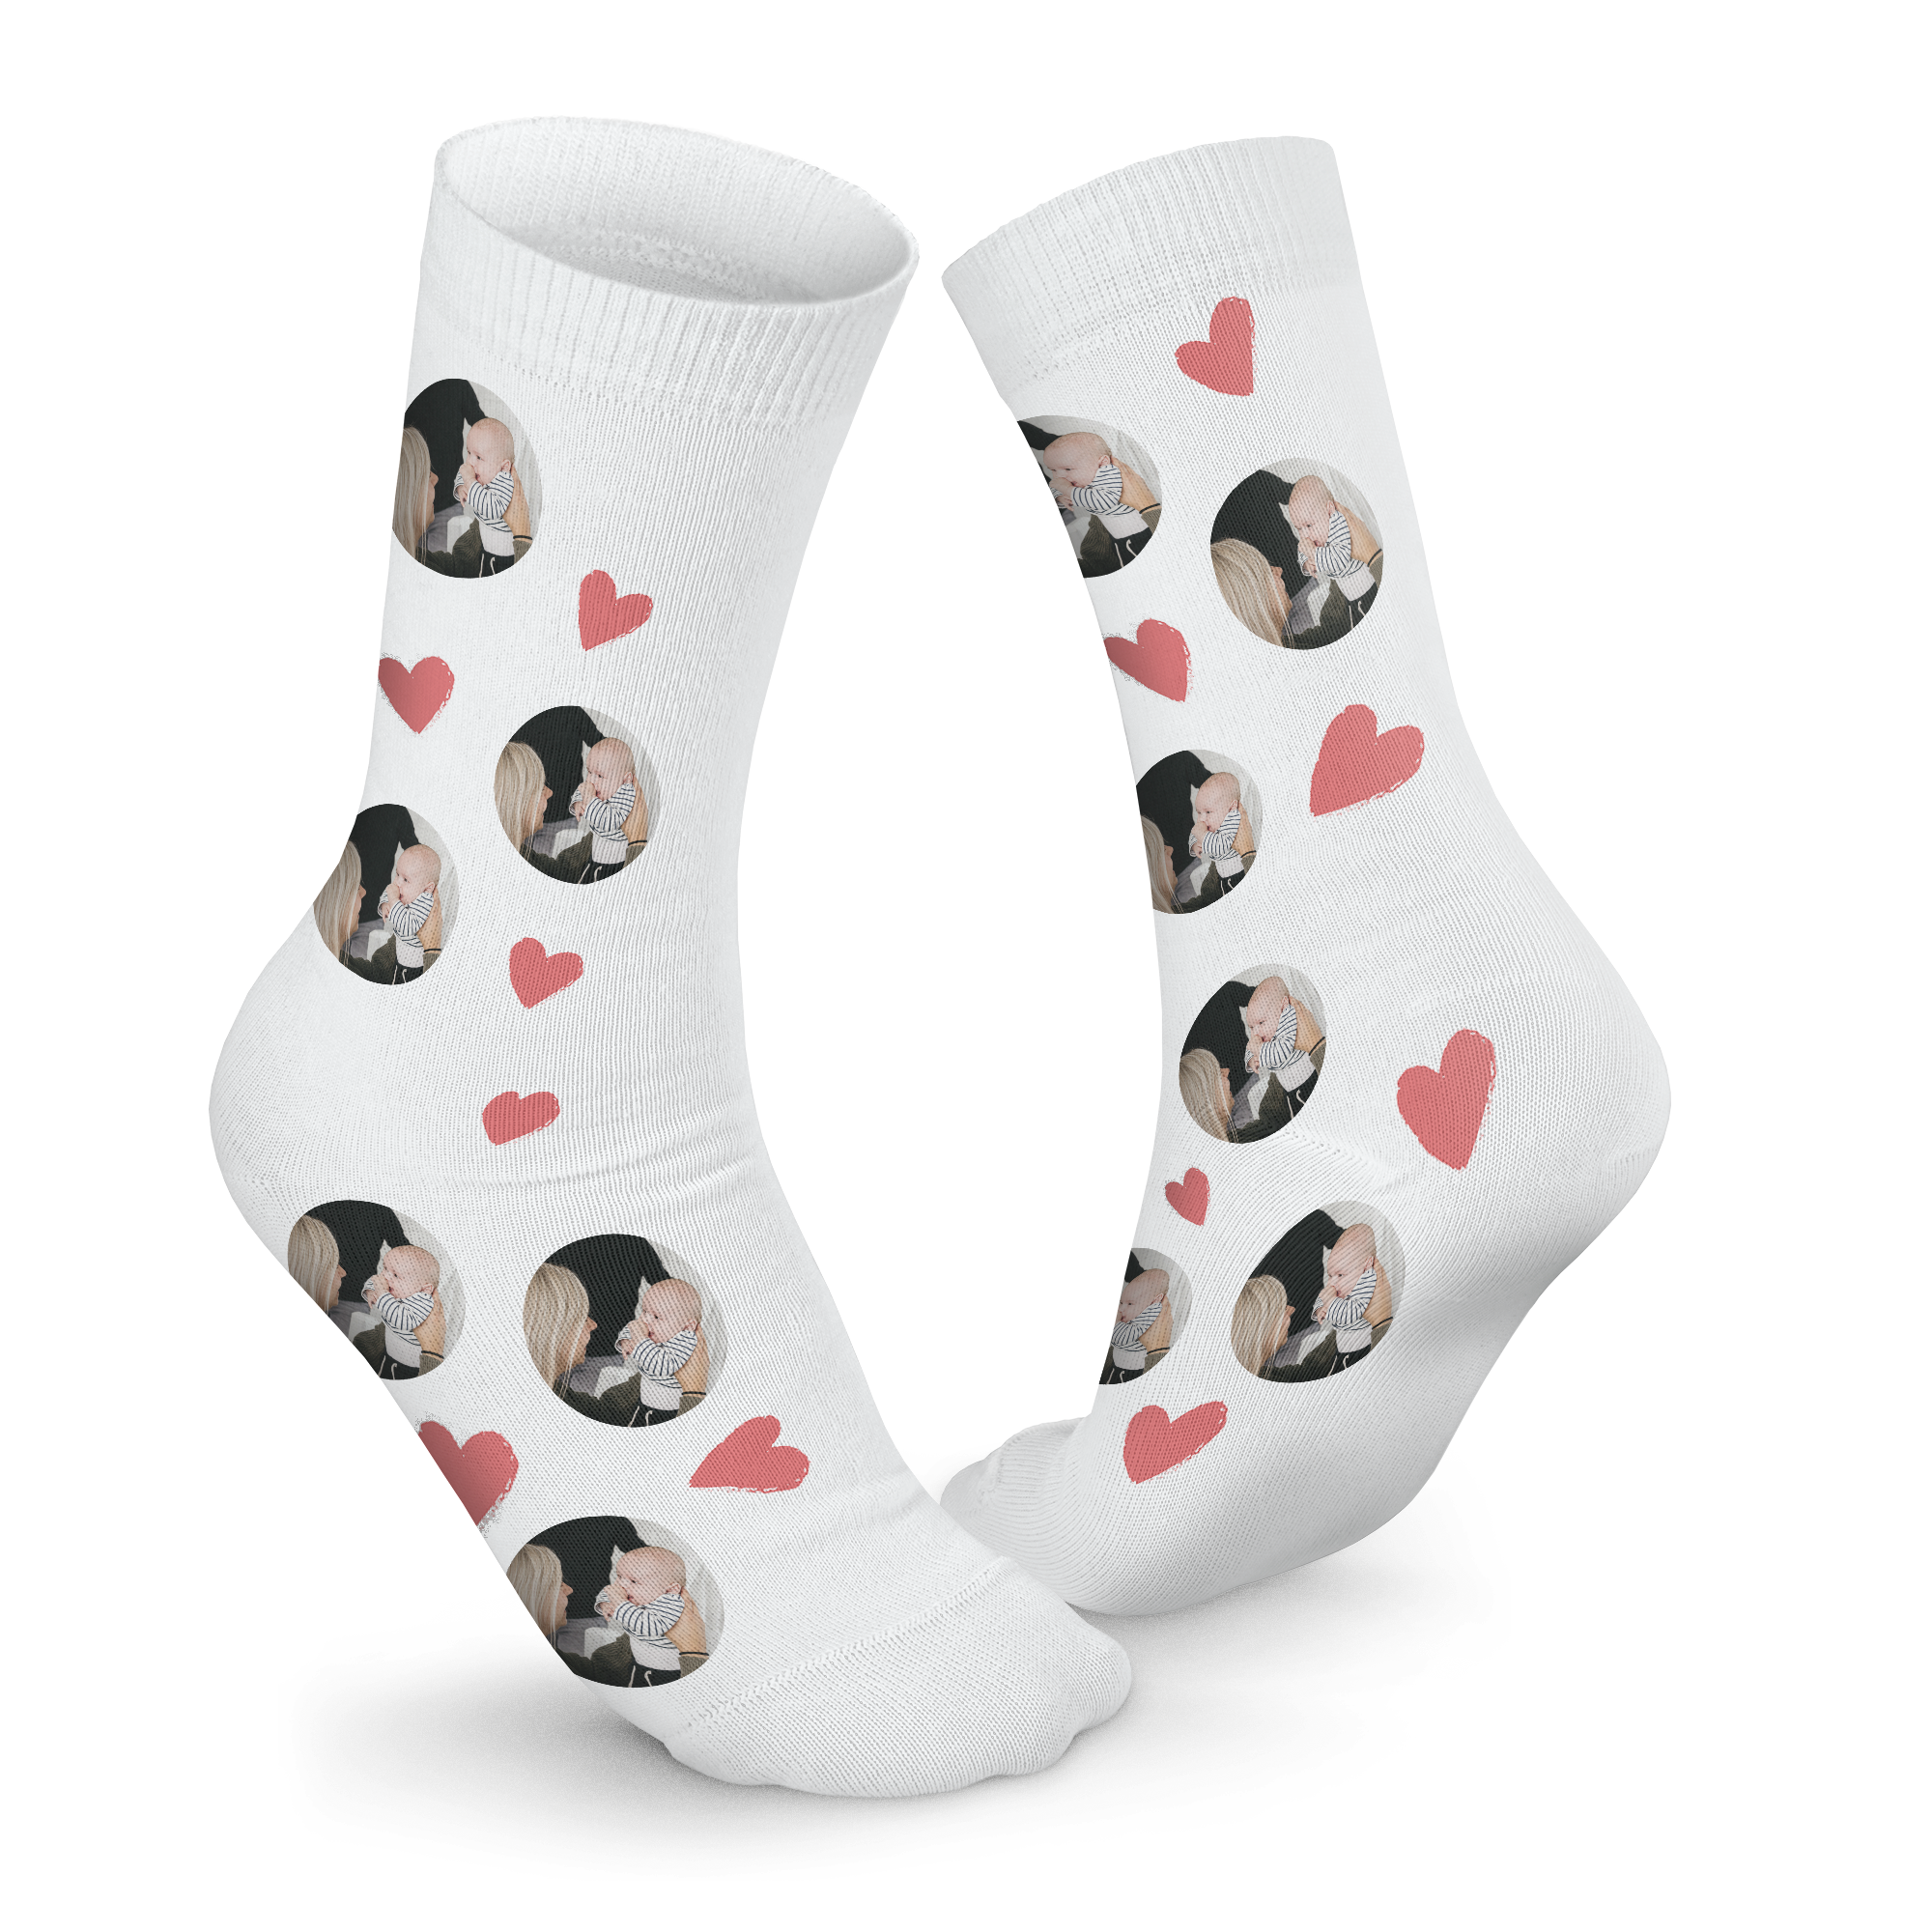 Personalised socks - Size 43-45